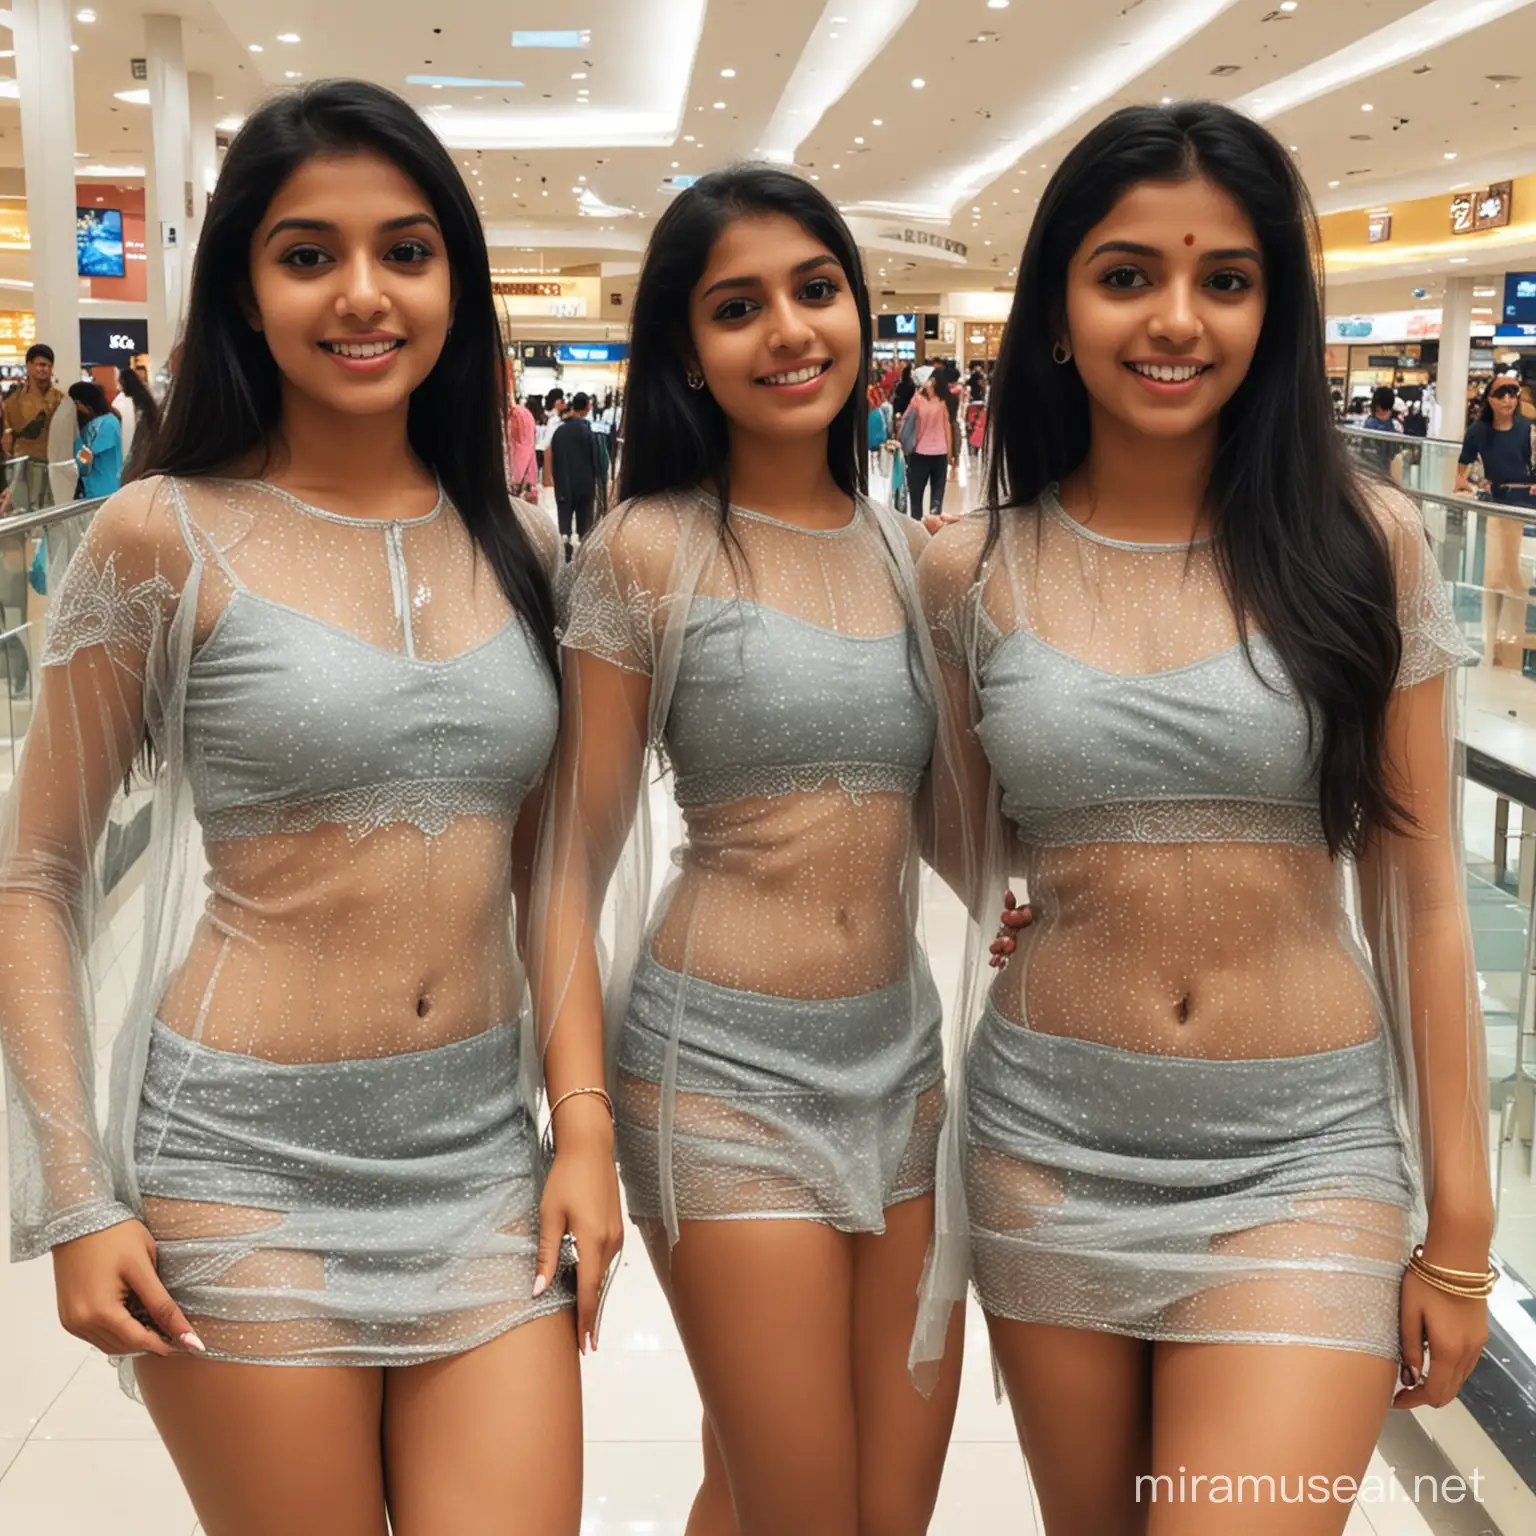 Three Indian Girls Wearing Elegant SeeThrough Dresses in Vibrant Mall Setting